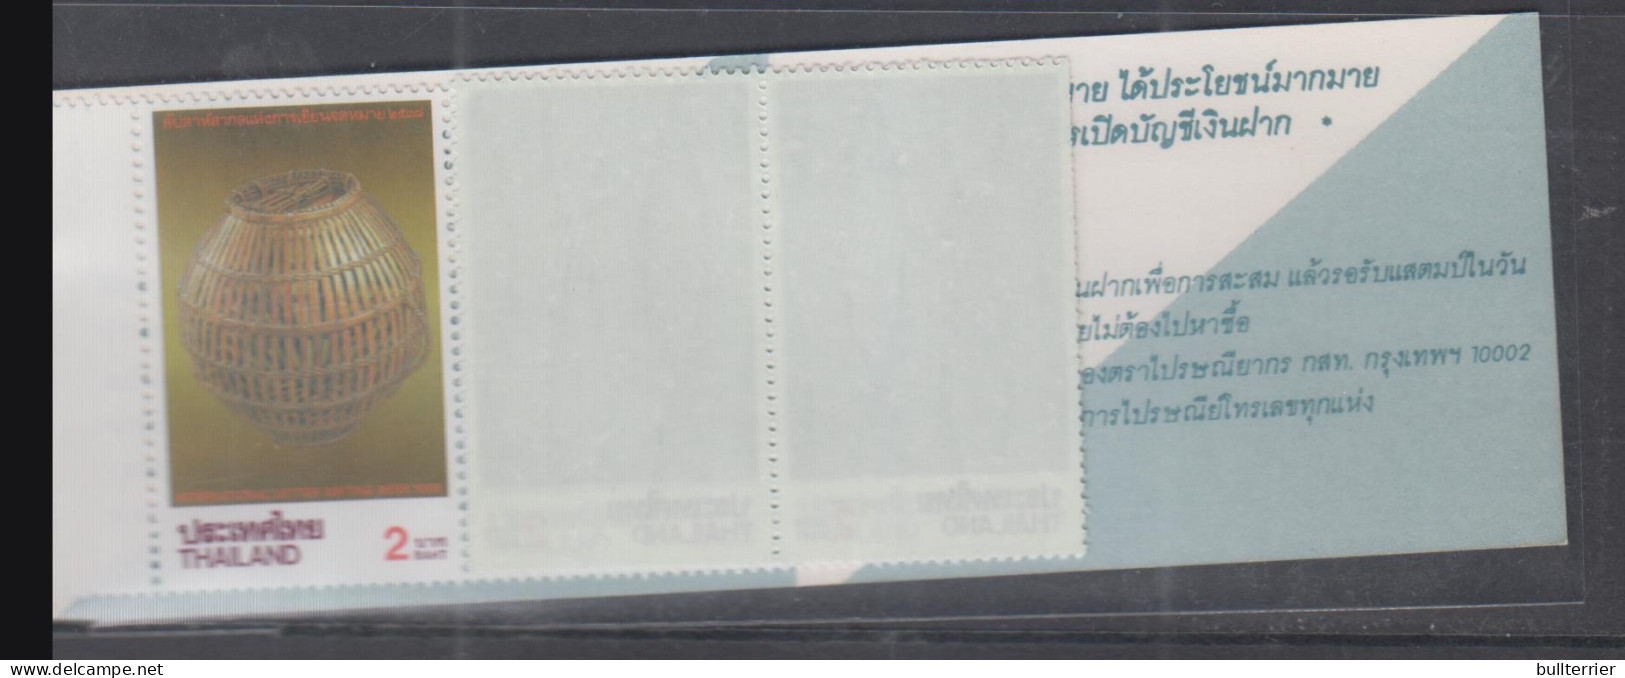 THAILAND - 1995 - KRACHANGKLOM BASKET BOOKLET COMPLETE MINT NEVER HINGED - Thailand